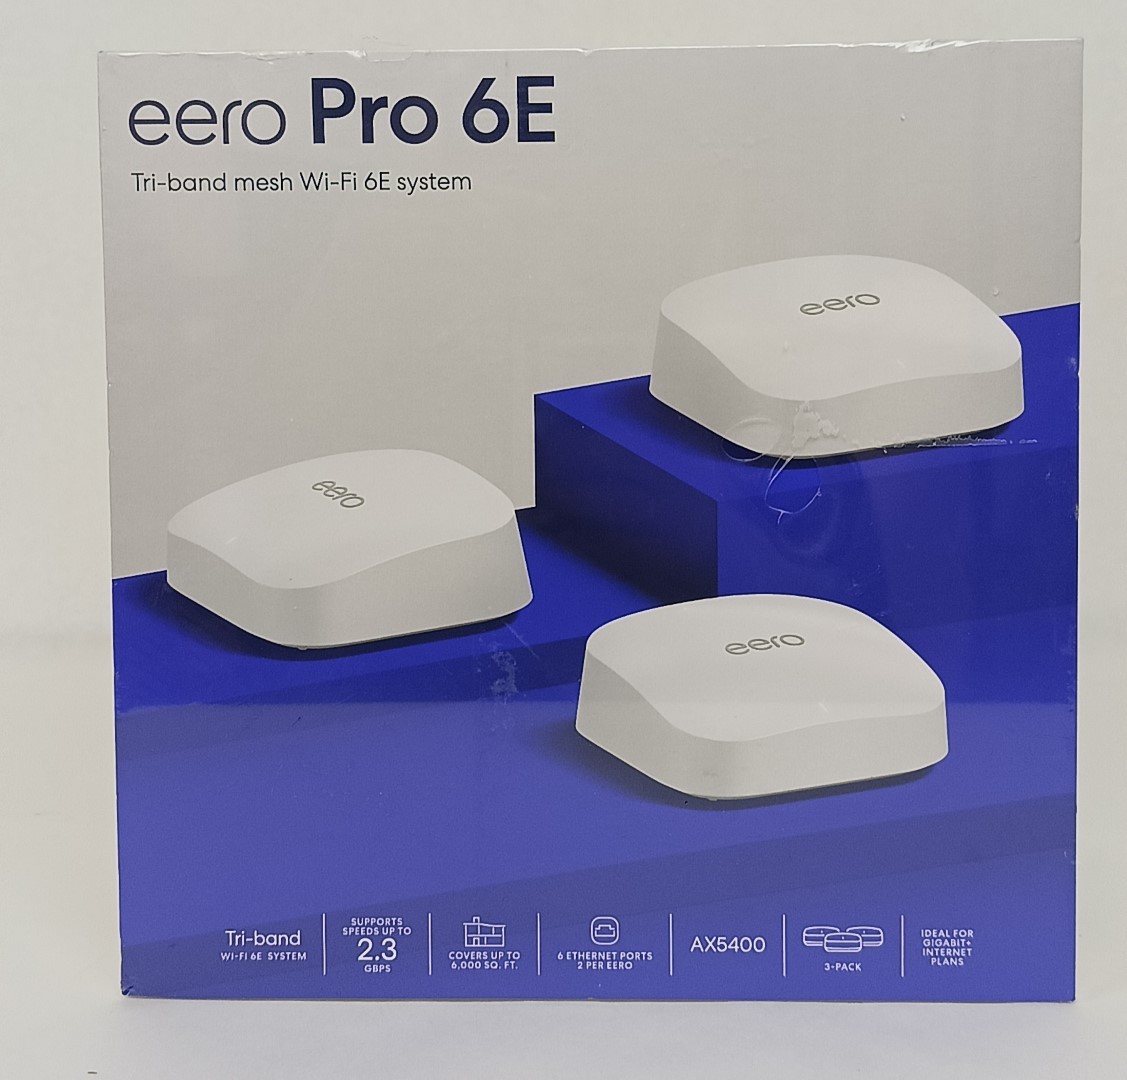 eero Pro 6E AXE5400 Tri-Band Mesh Wi-Fi 6E System (3-pack) - White - BN